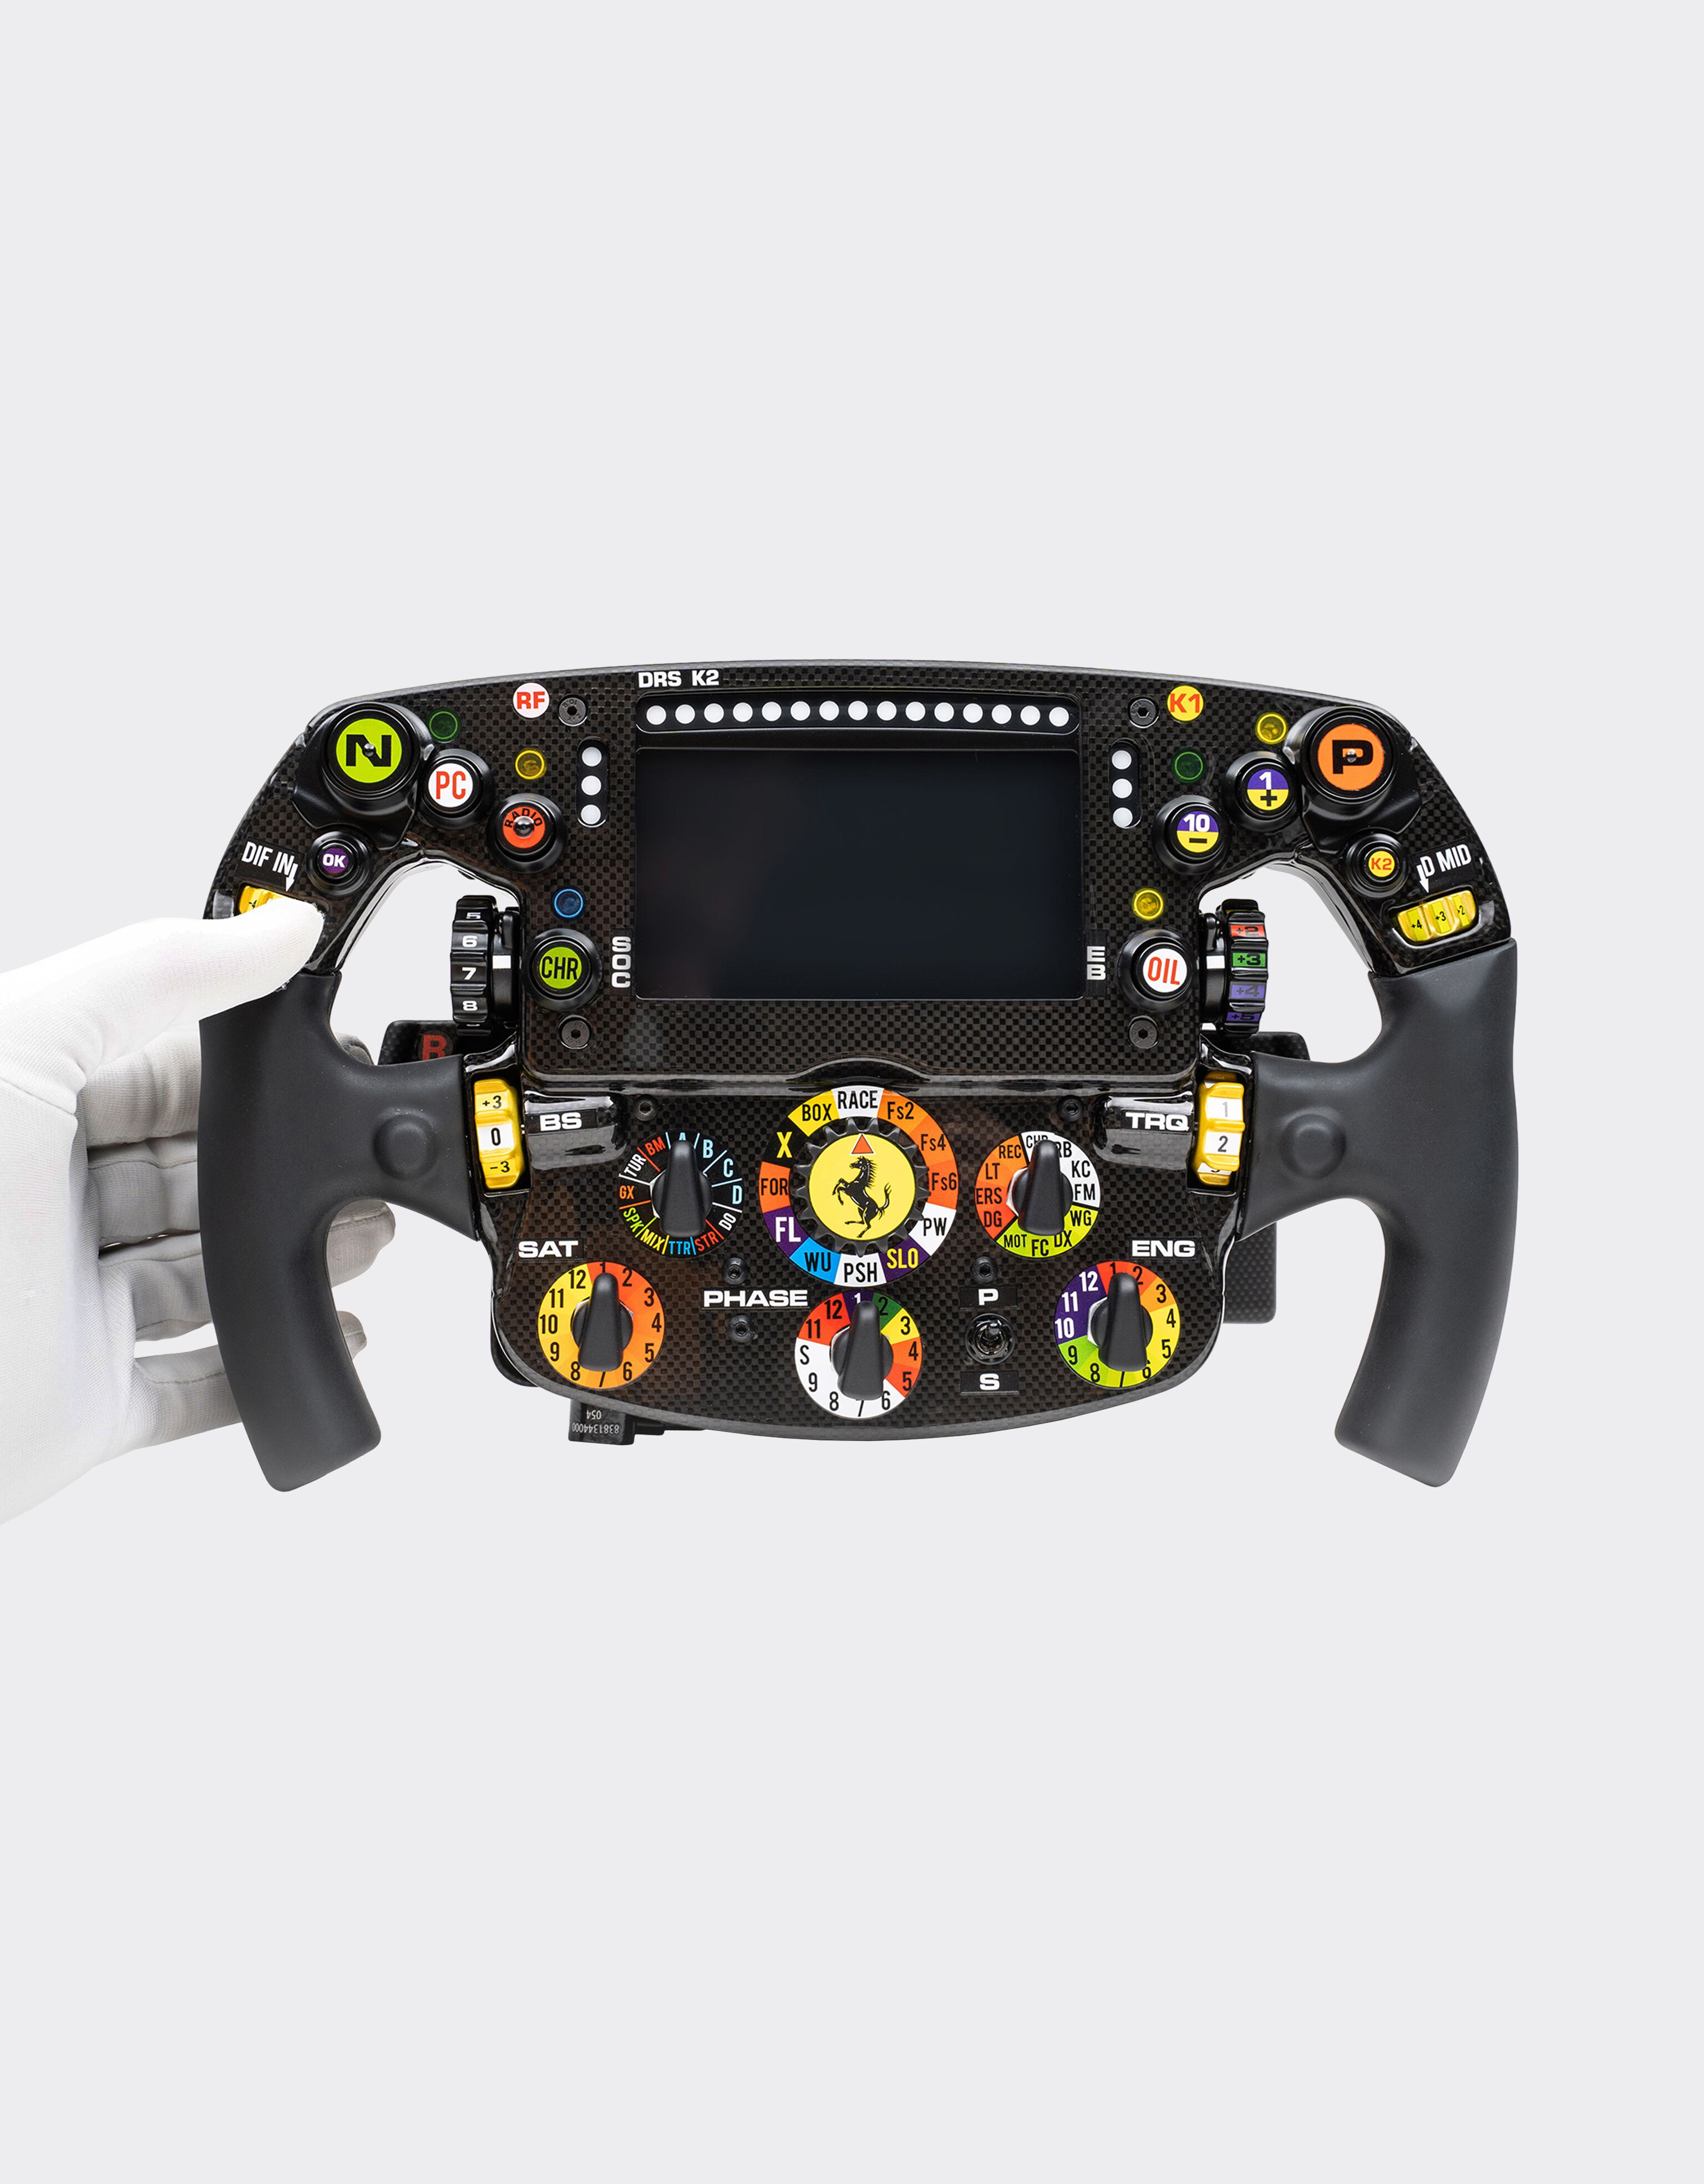 Ferrari Ferrari F1-75 steering wheel 1:1 scale model 黑色 F0667f